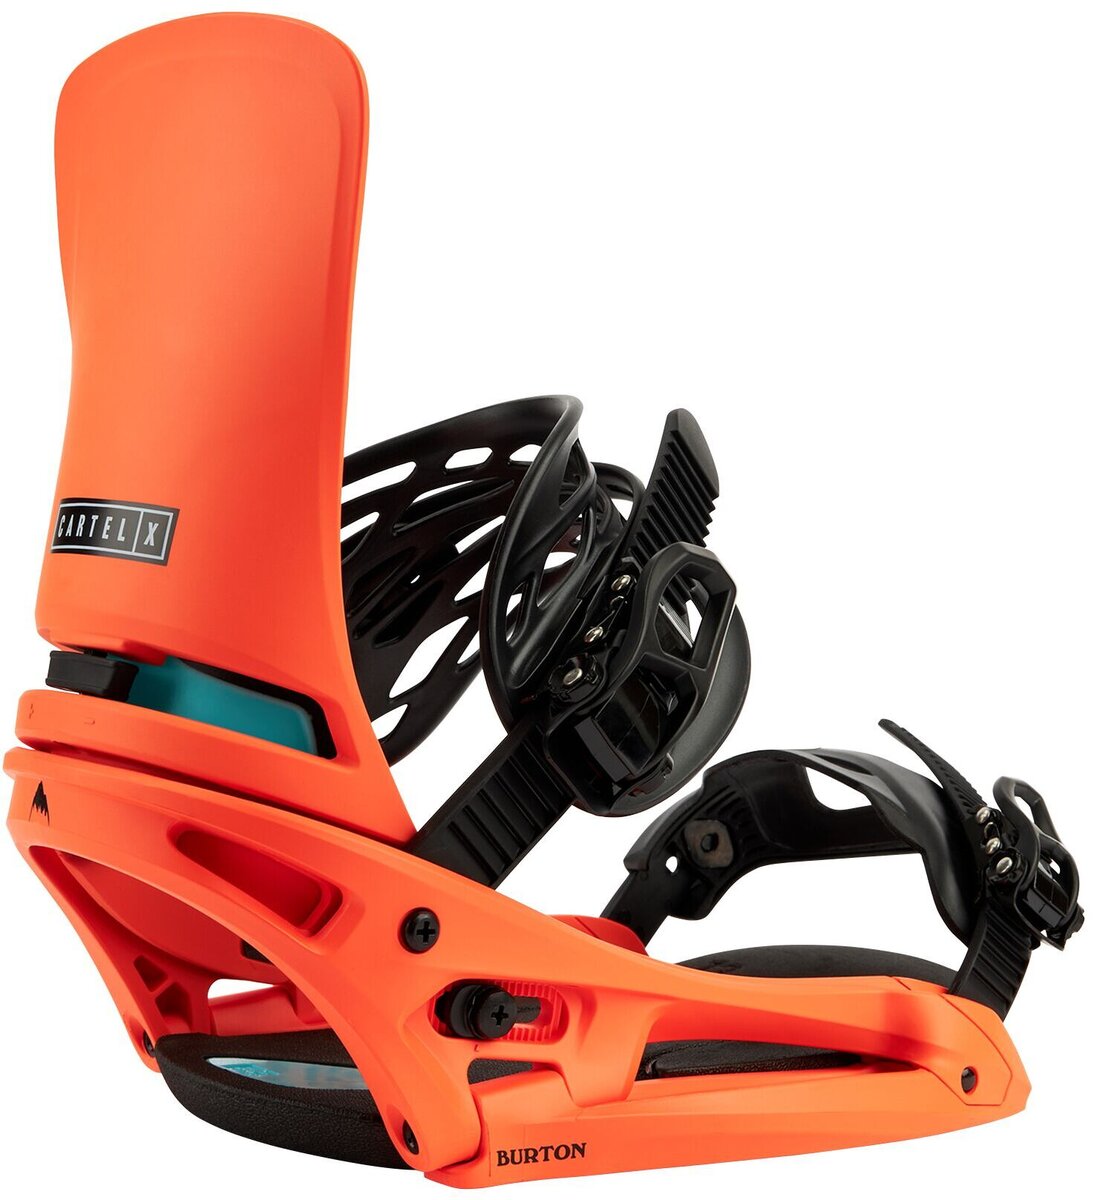 Wanorde Lil mode Burton Men's Cartel X EST Binding - Bike Board and Ski